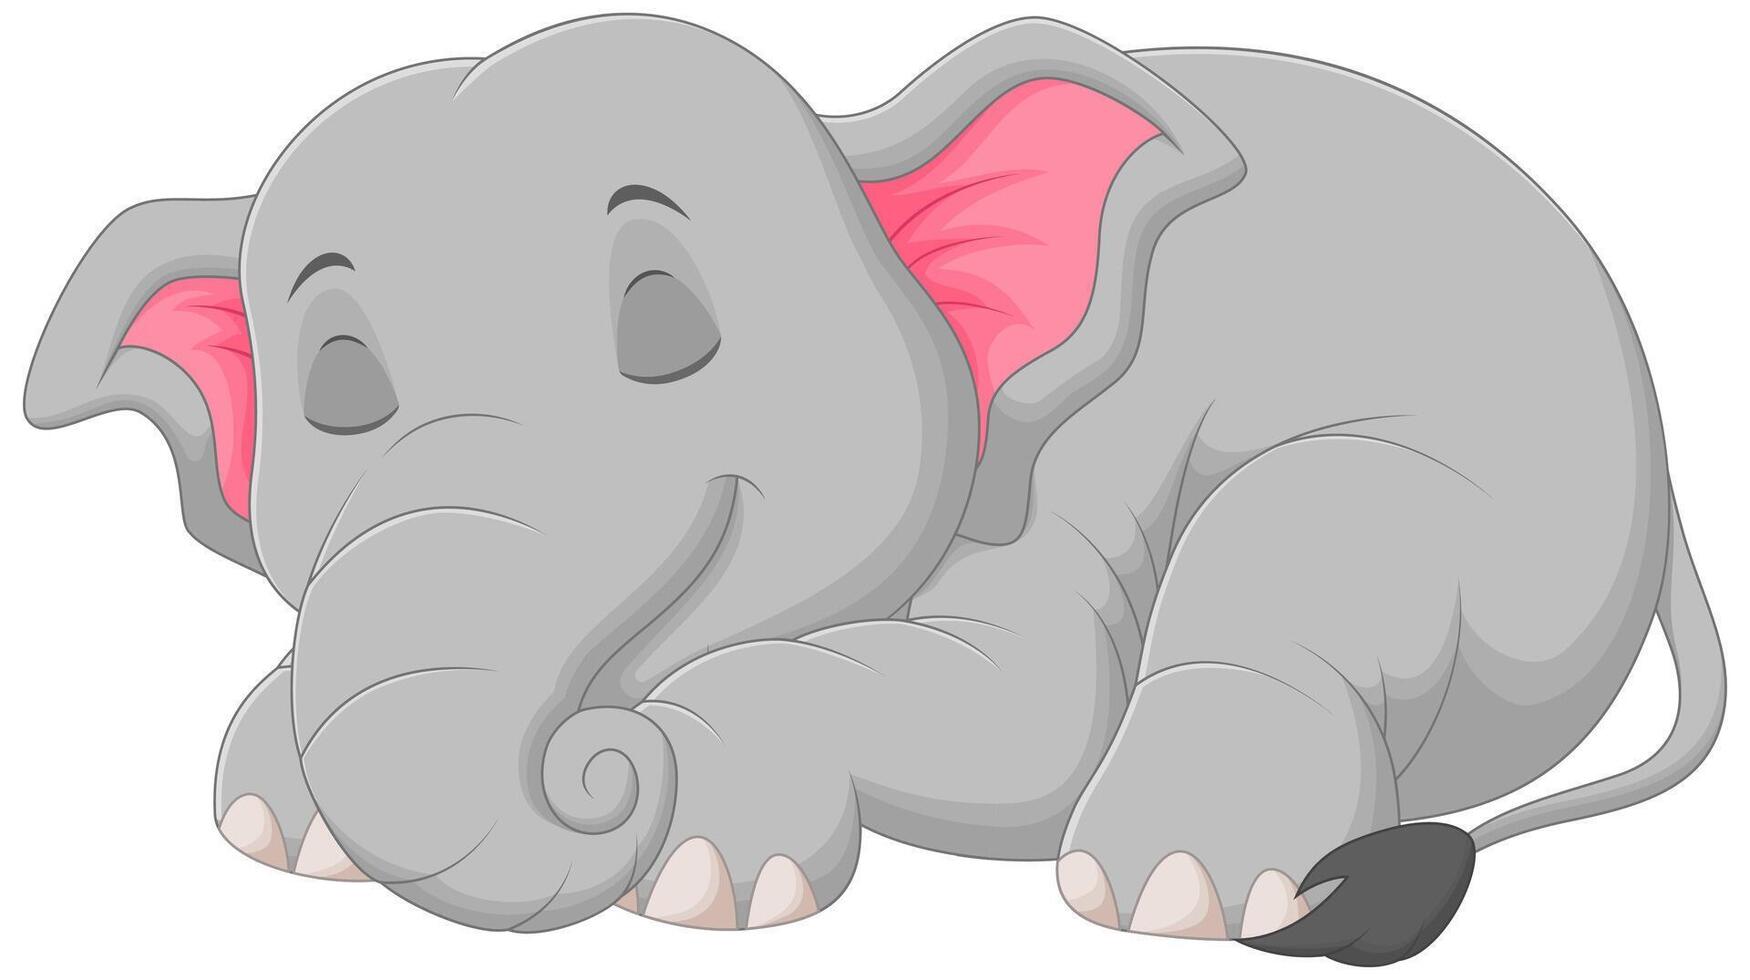 Cute Elephant Cartoon Sleeping Vector Illustration. Animal Nature Icon Concept Isolated Premium Vector